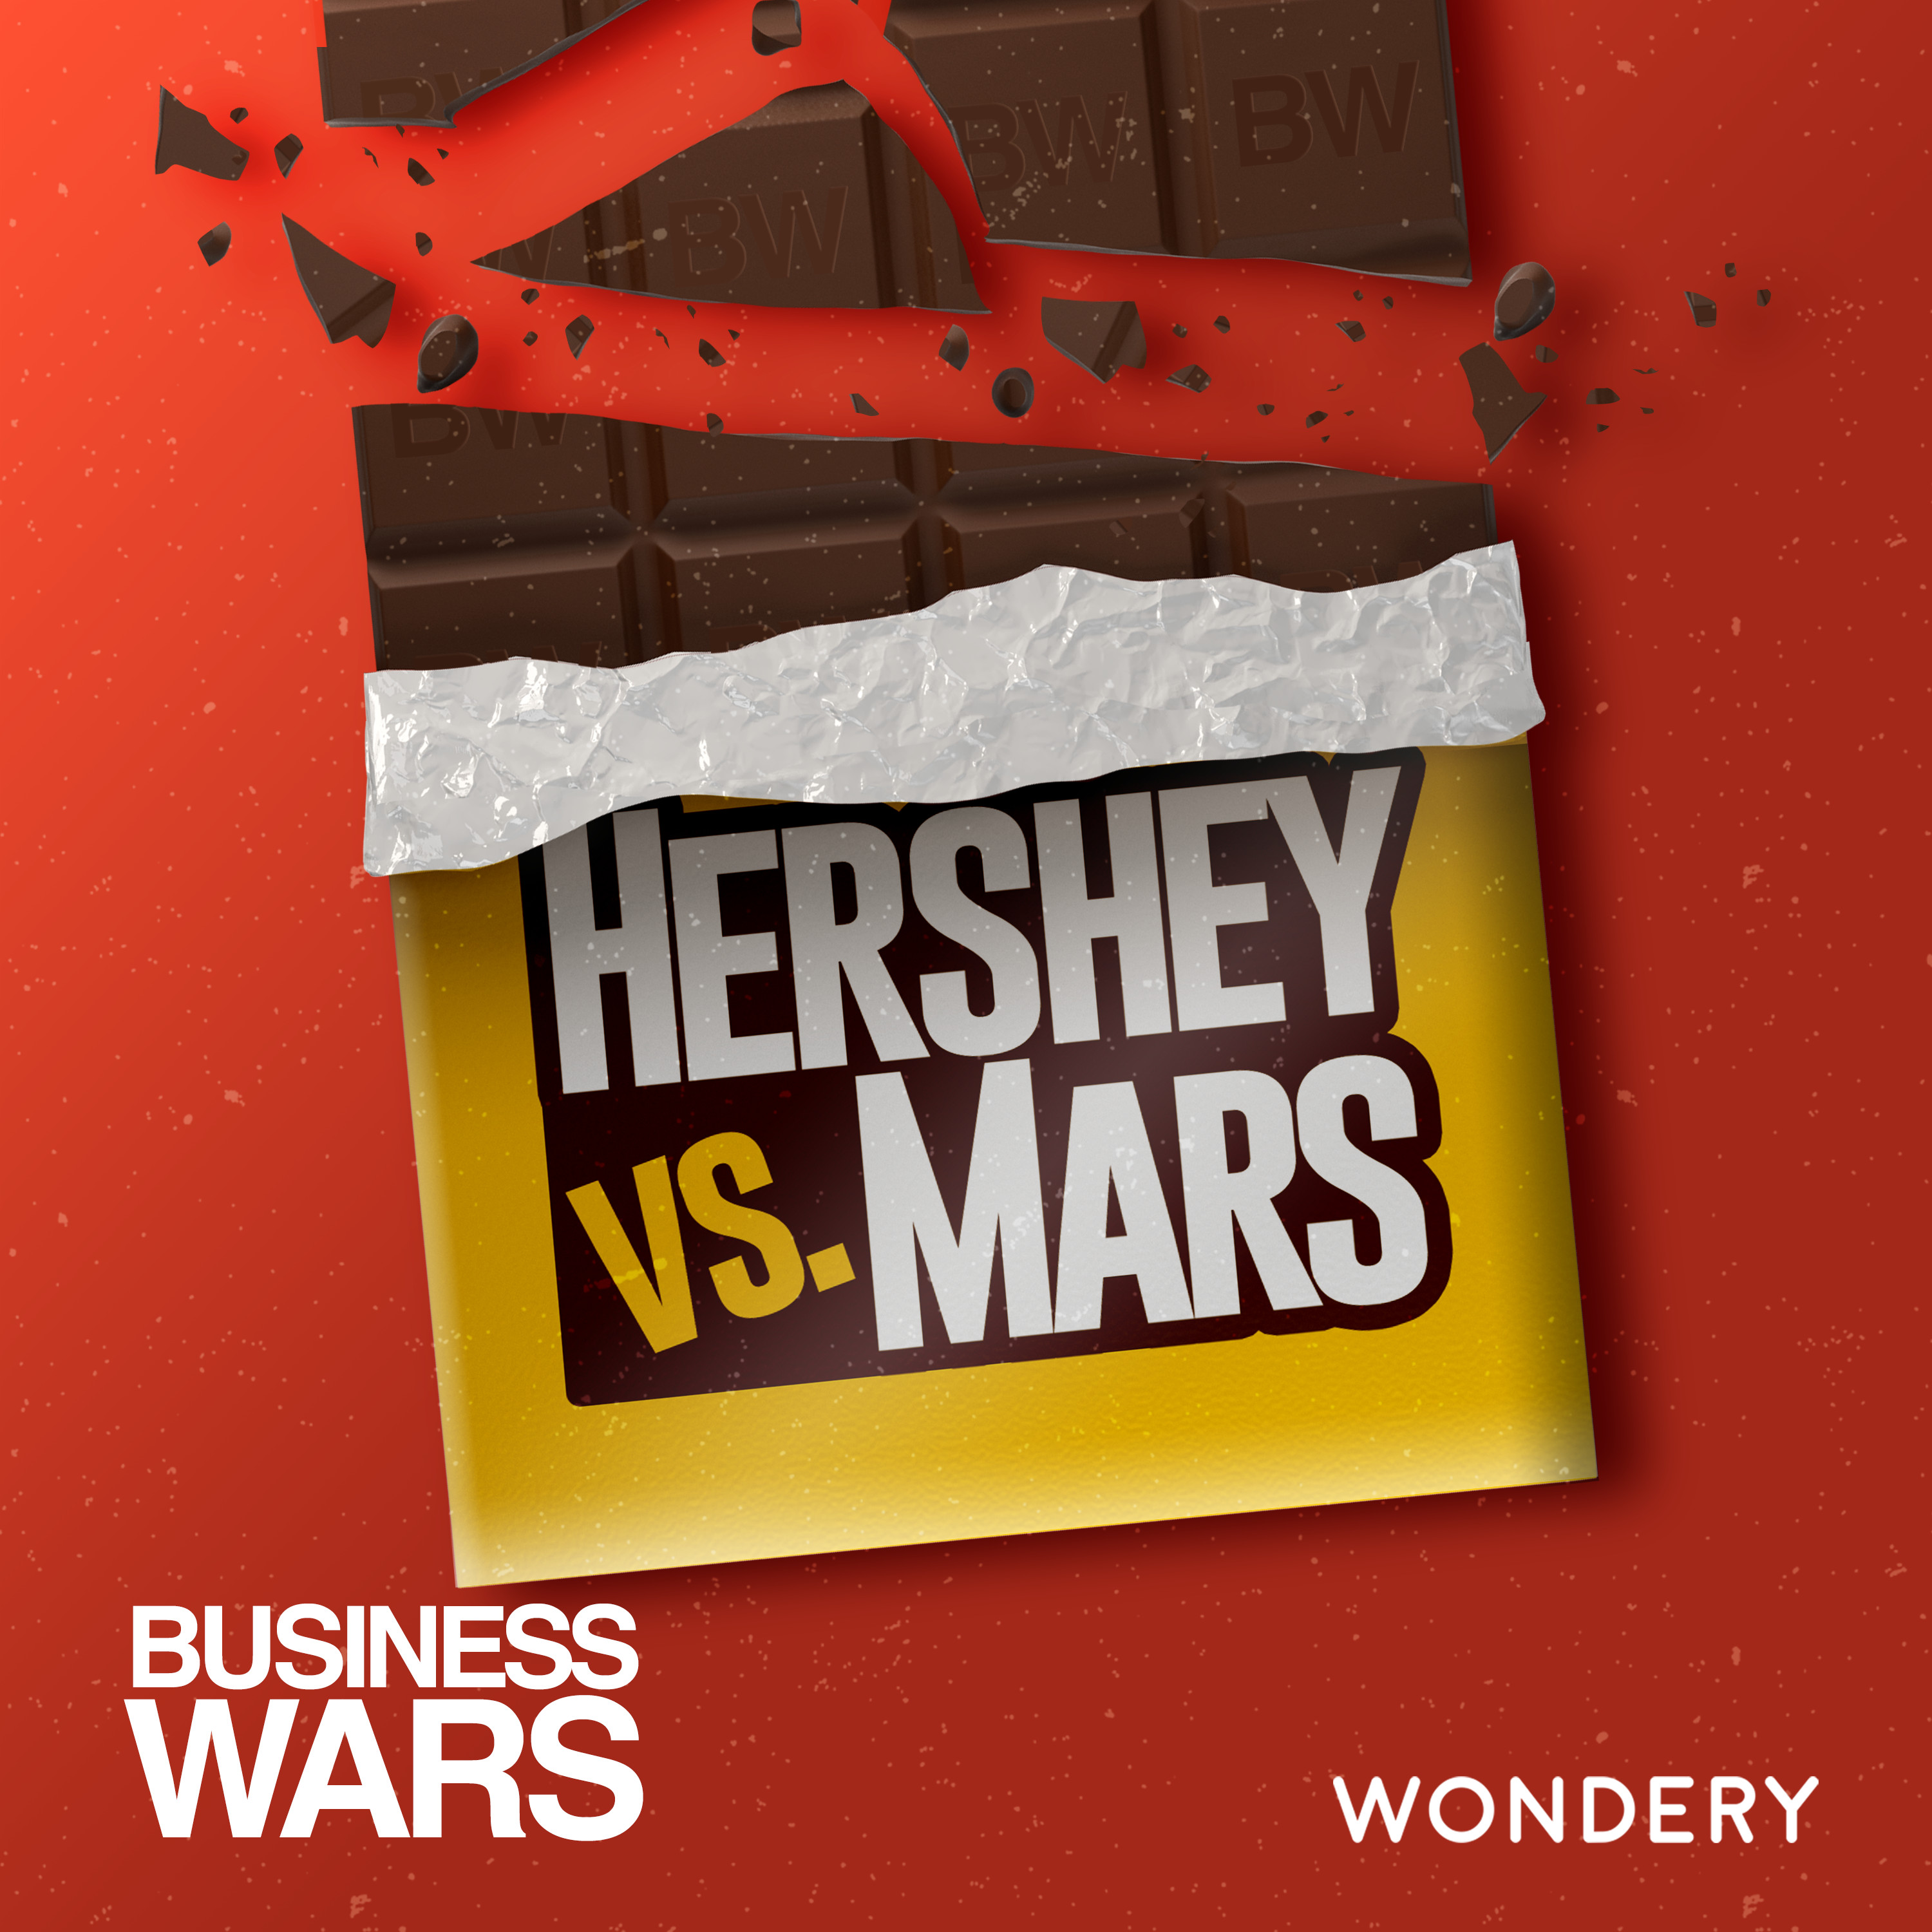 Hershey vs Mars - A Candy-Coated Prayer | 3